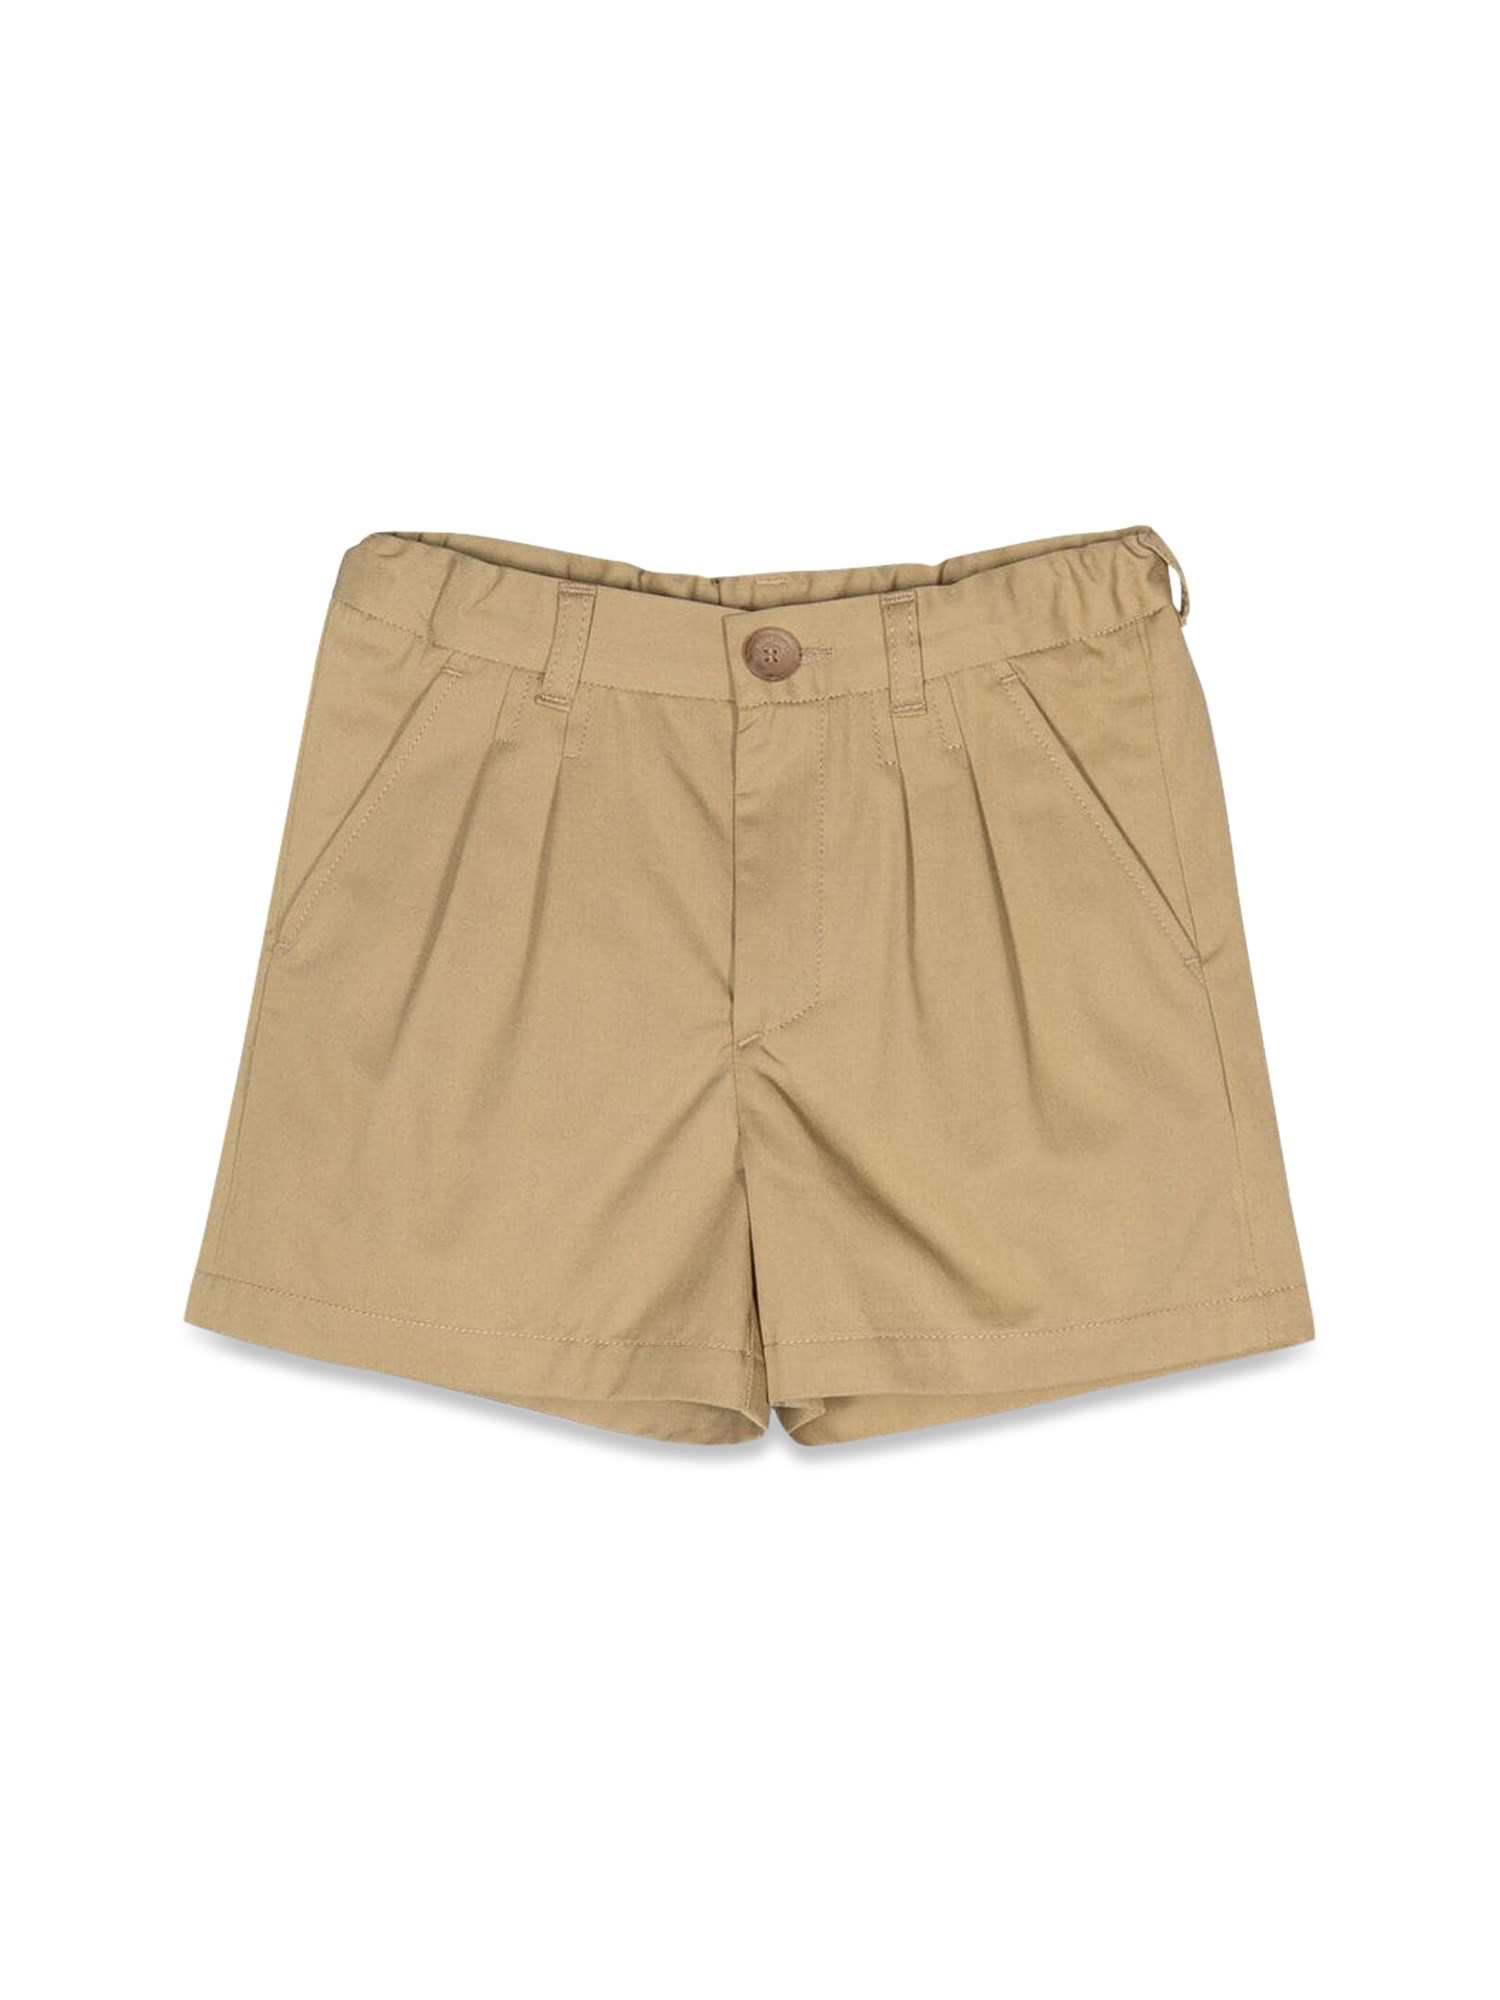 Bonpoint bonpoint charles bermuda shorts